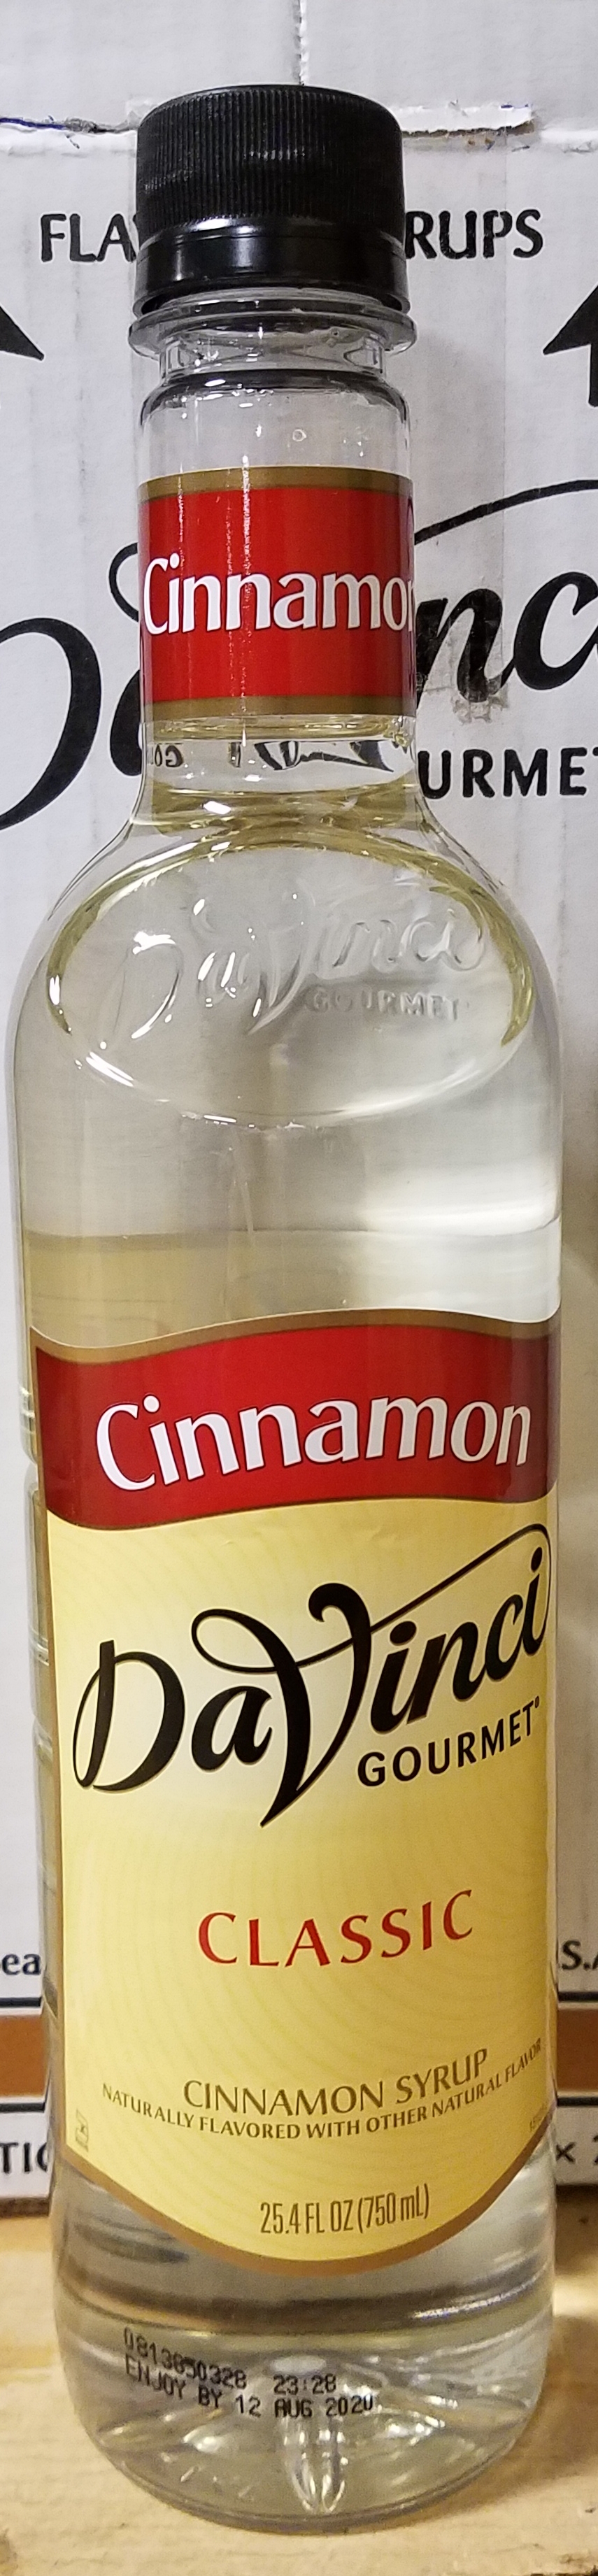 DaVinci Cinnamon 4/750ml - Sold by EA